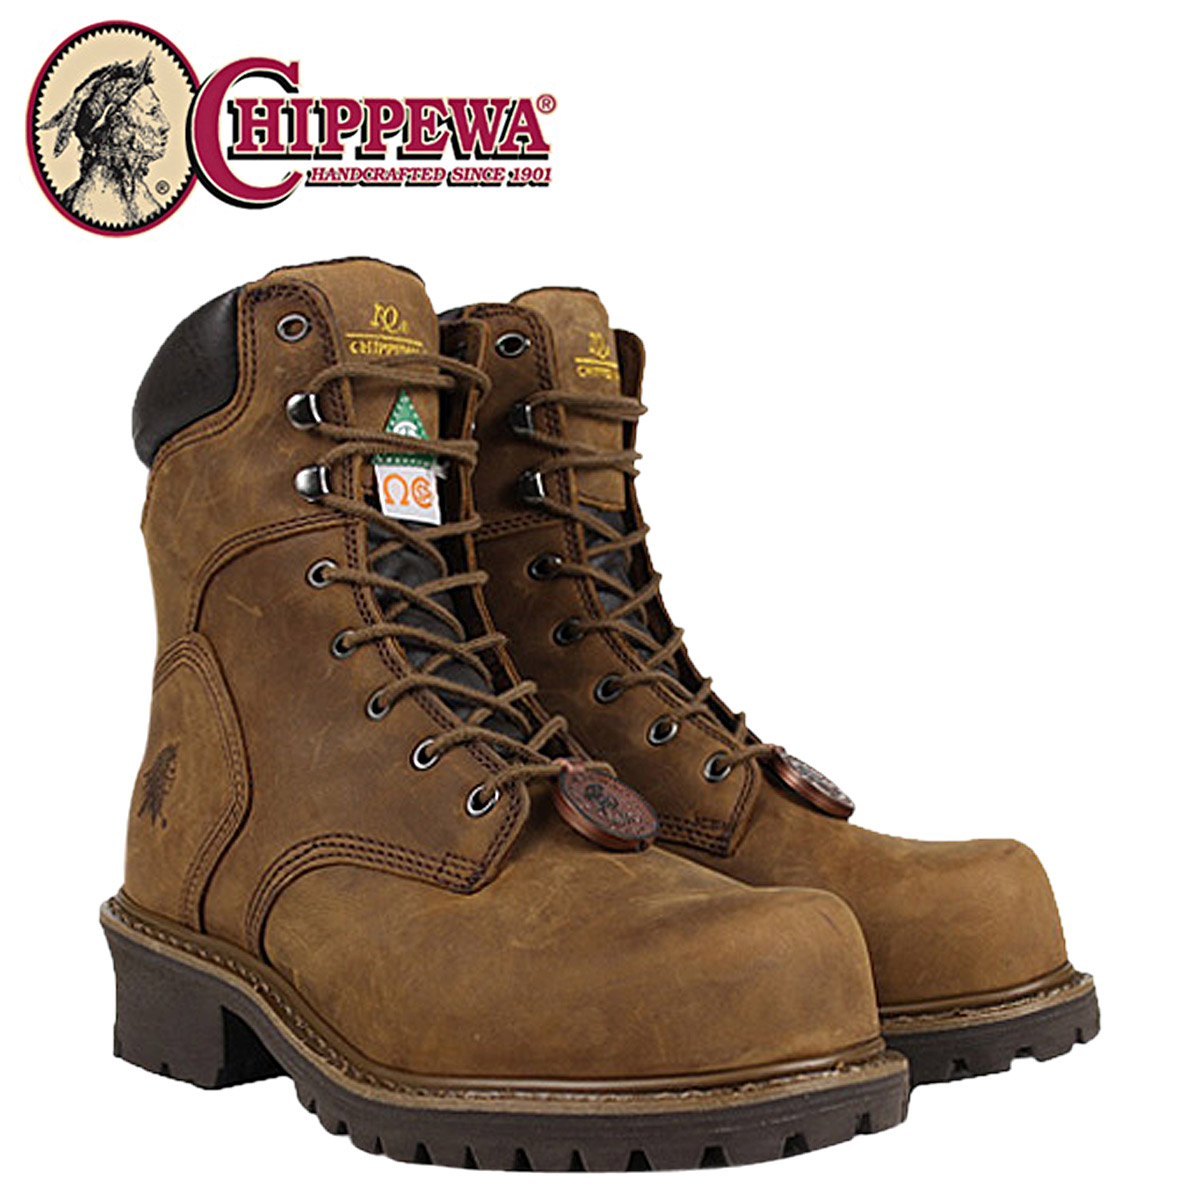 chippewa steel toe logger boots